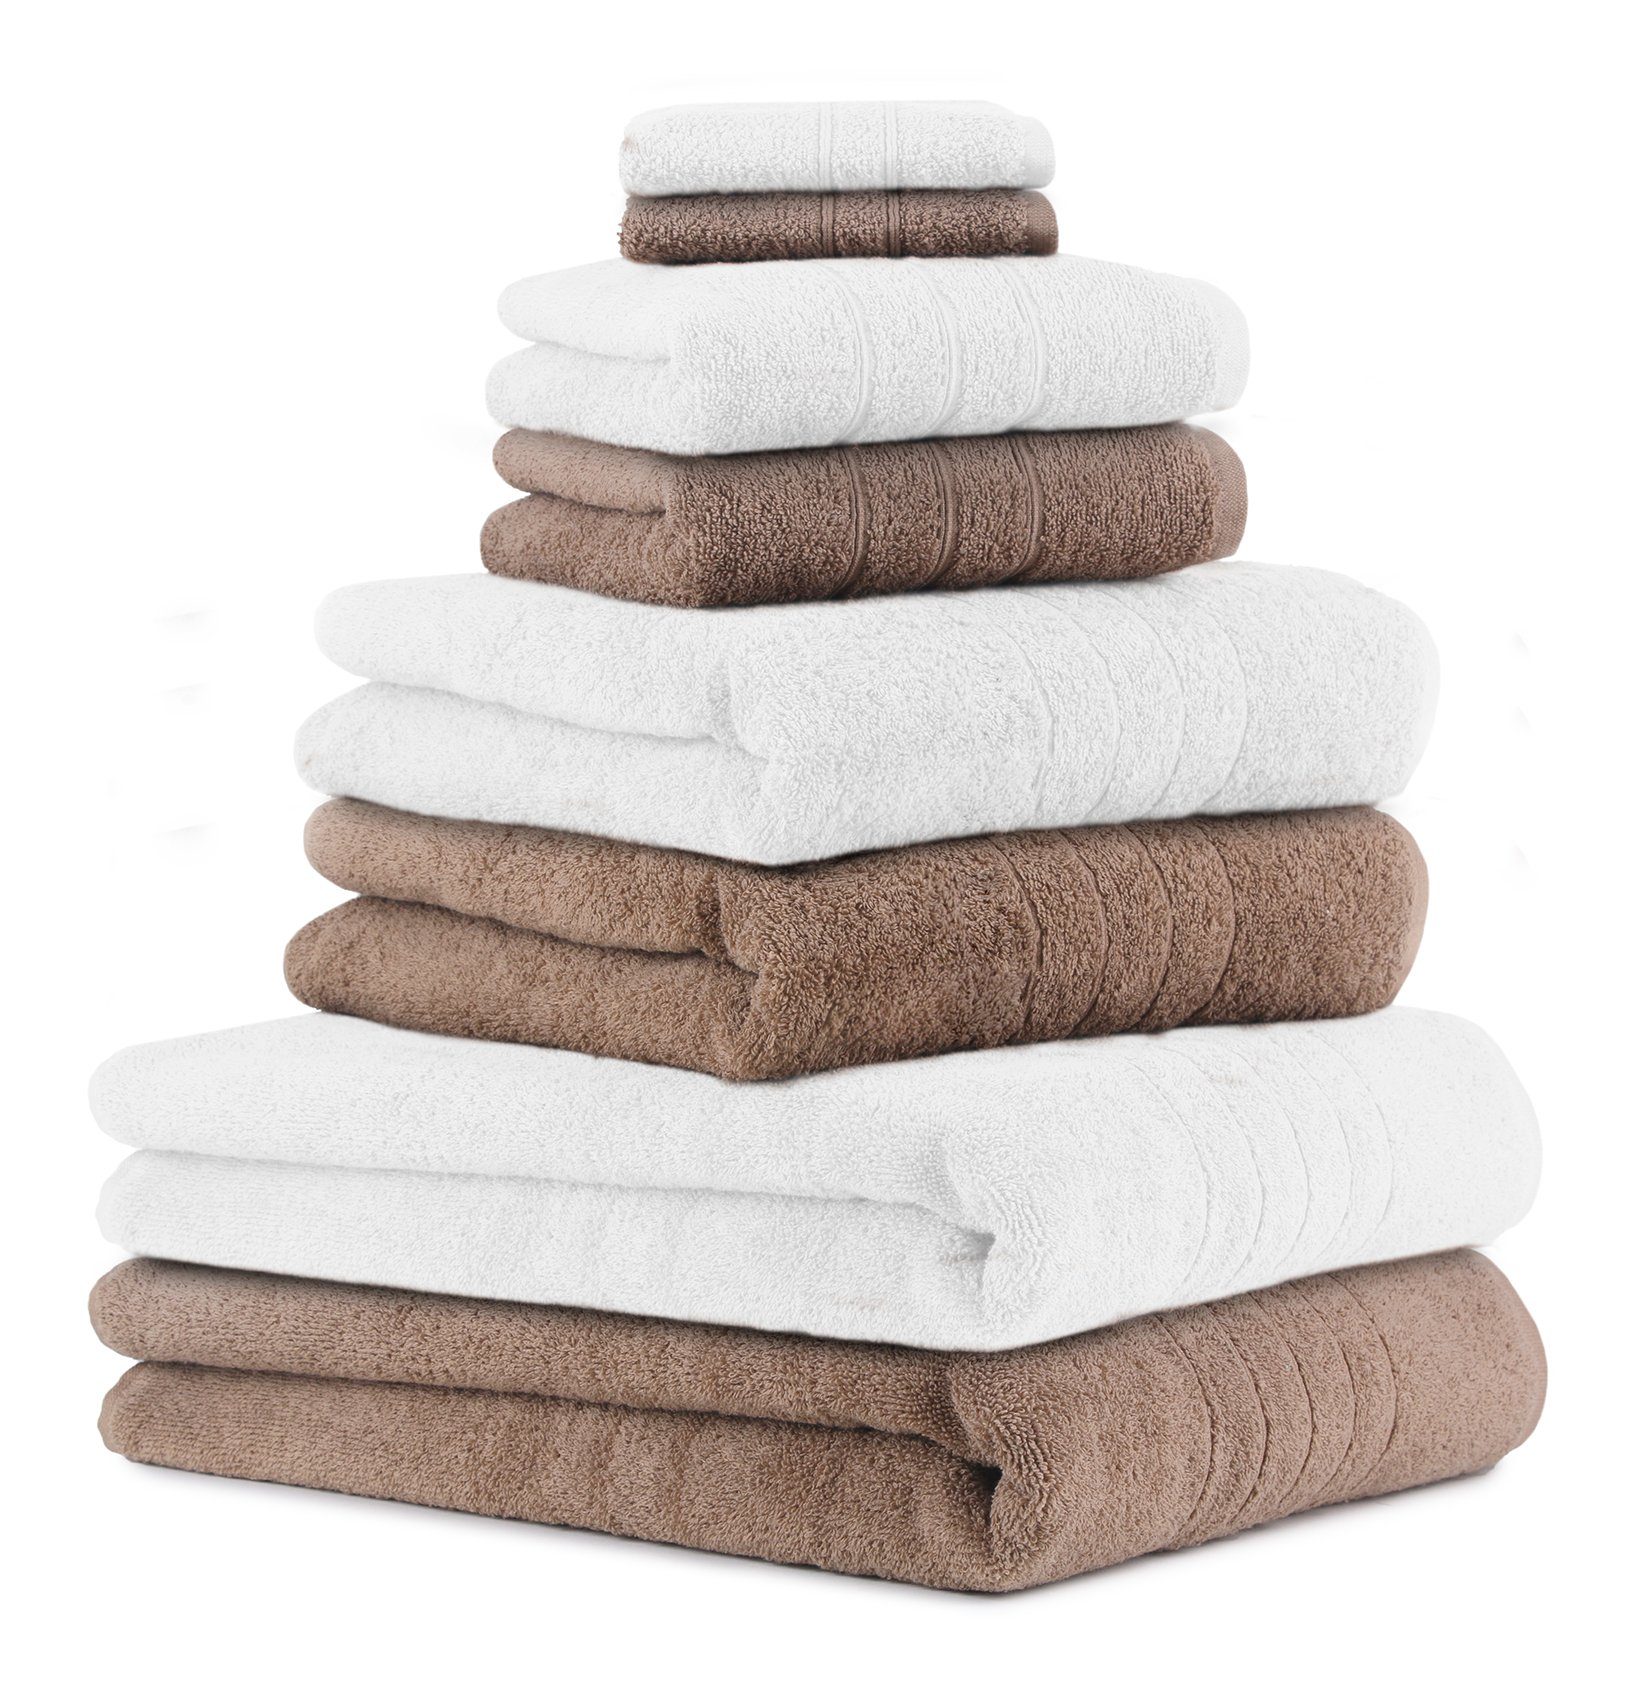 Betz Handtuch Set 8-TLG. Handtuch-Set Deluxe 100% Baumwolle 2 Badetücher 2 Duschtücher 2 Handtücher 2 Seiftücher Farbe weiß und Mokka, 100% Baumwolle, (8-tlg)